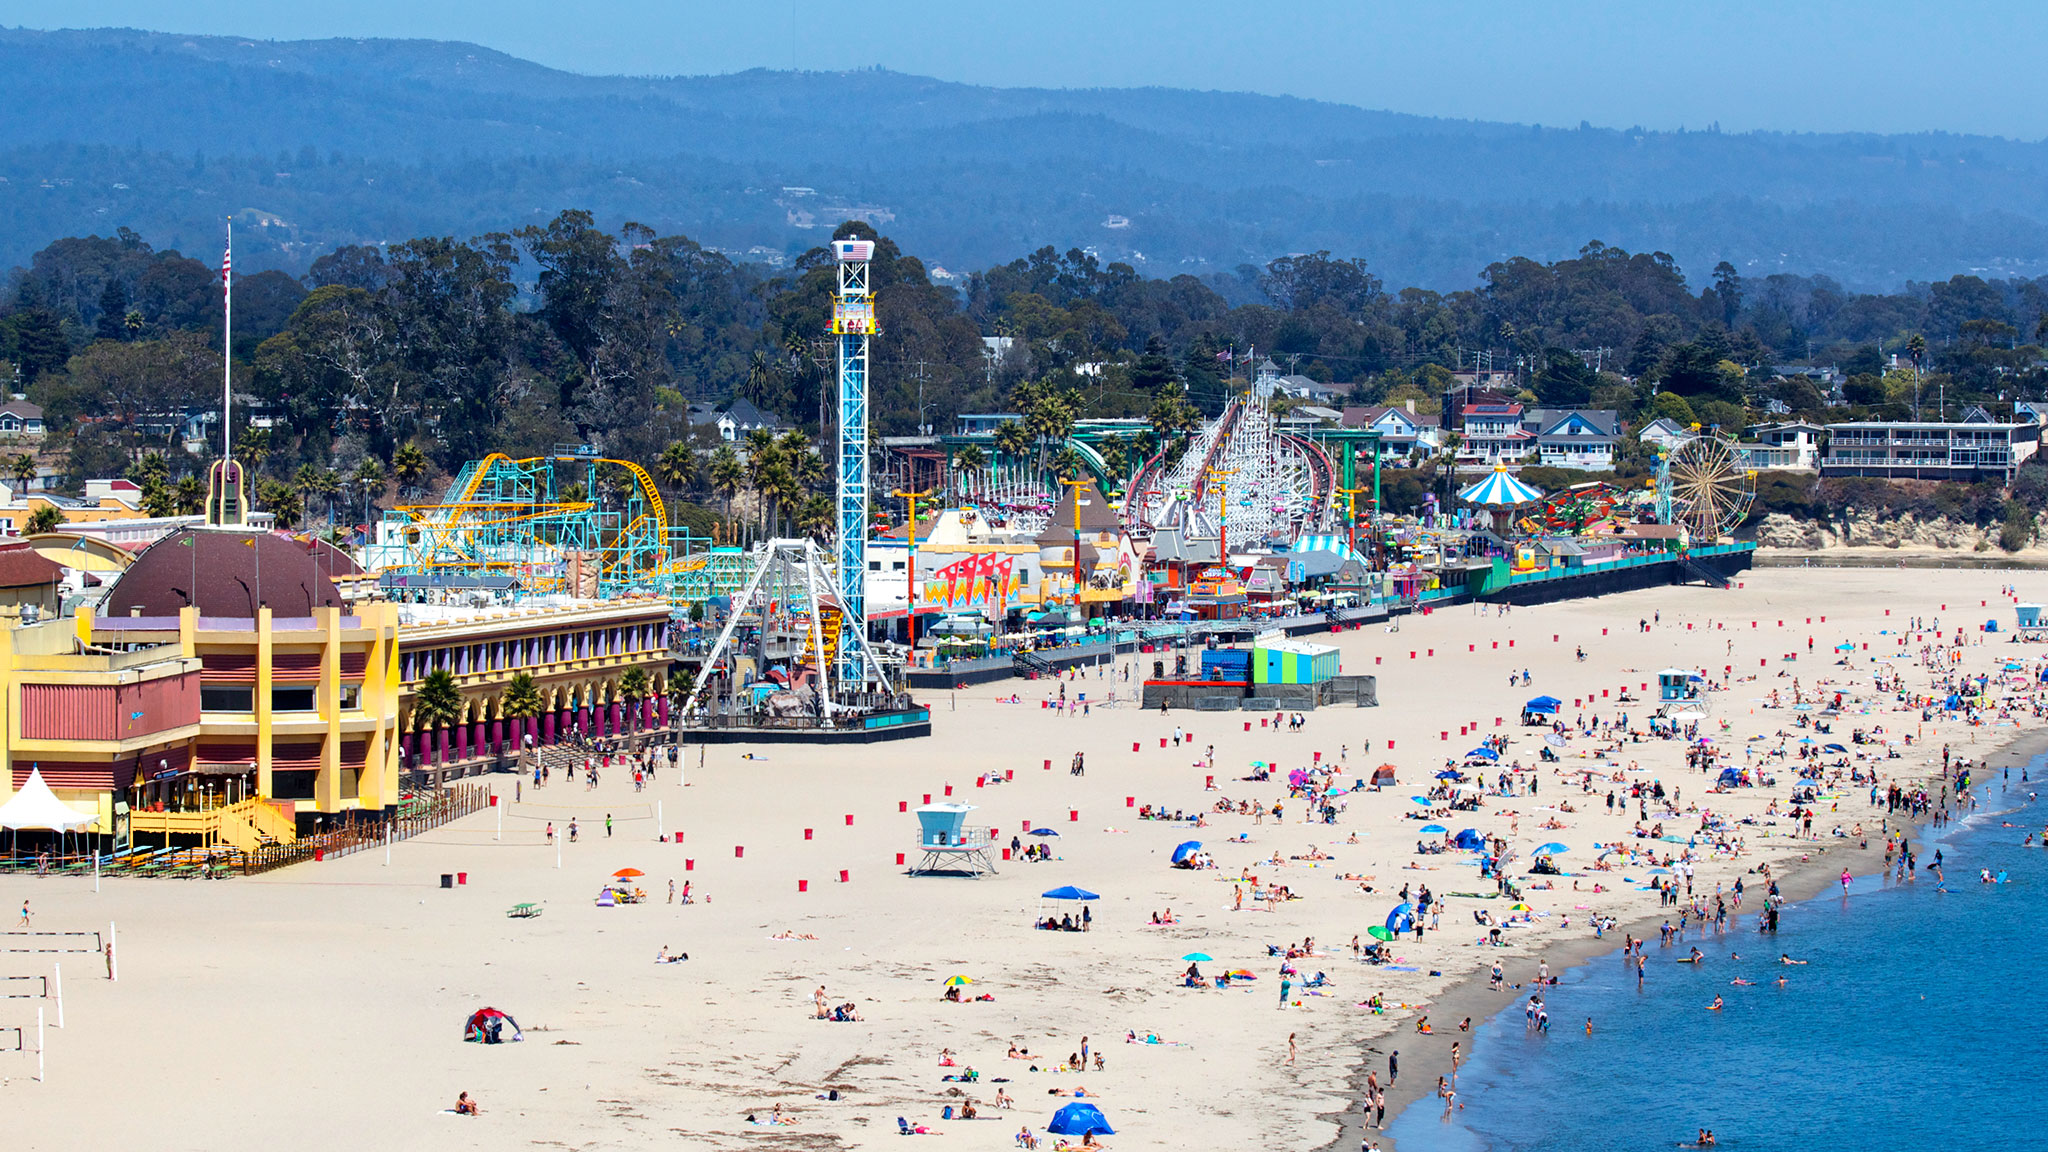 Santa Cruz Beach Boardwalk Events At The Beach